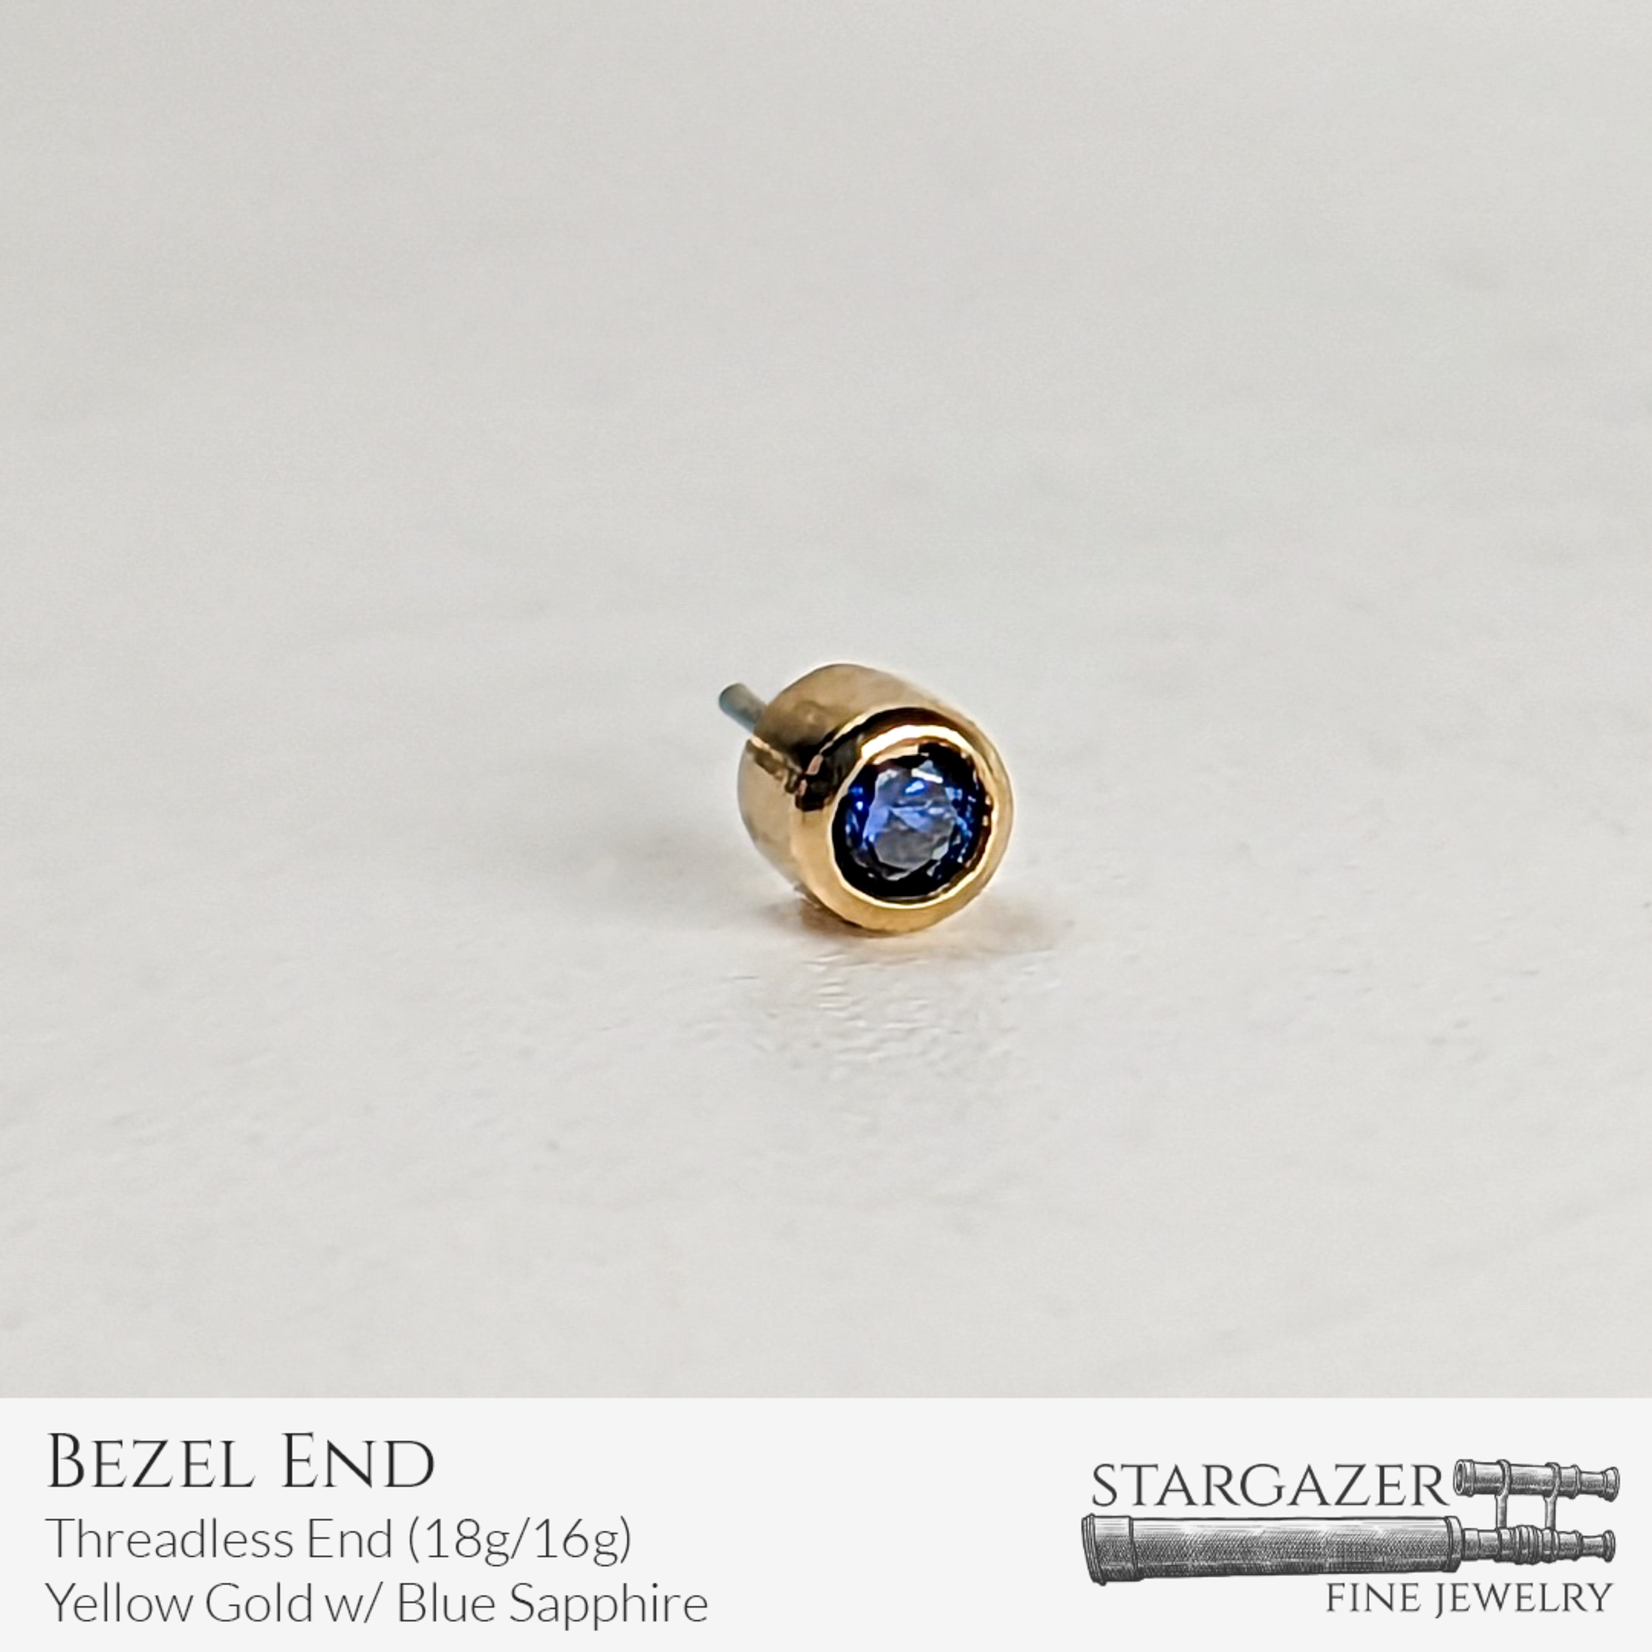 Bezel End TL; Yellow Gold w/ Blue Sapphire (2mm)